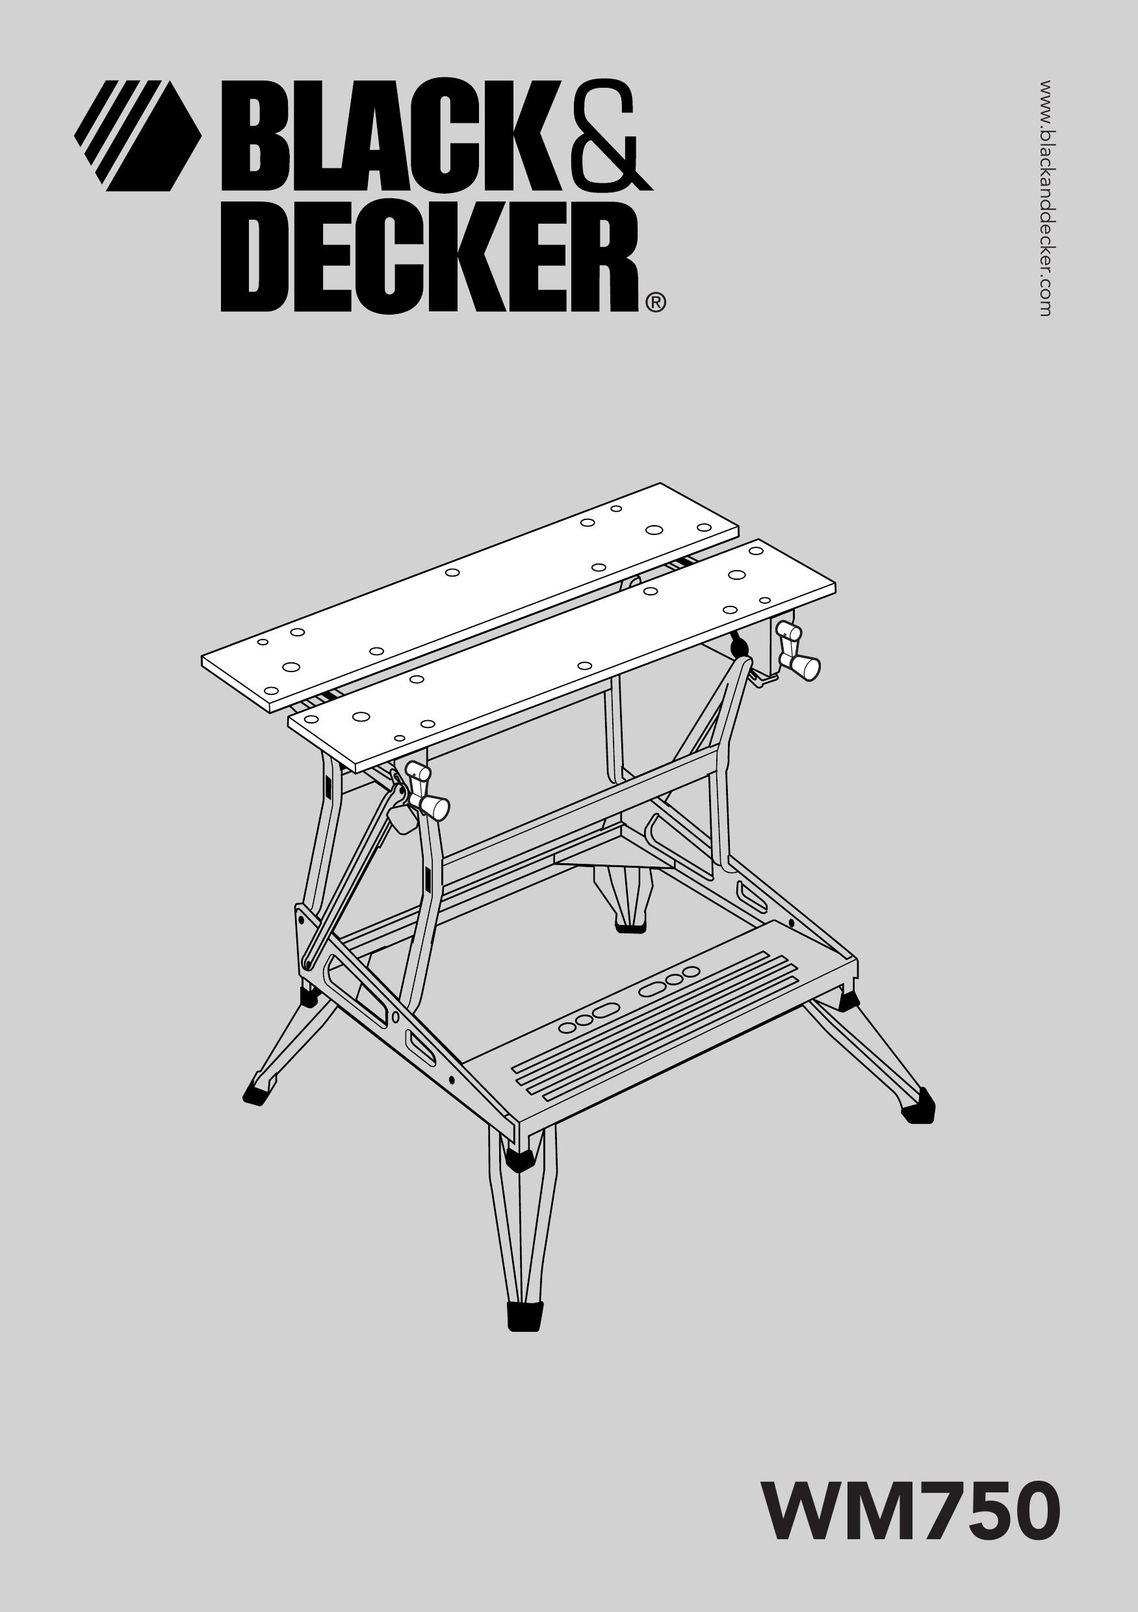 Black & Decker WM750 Work Light User Manual